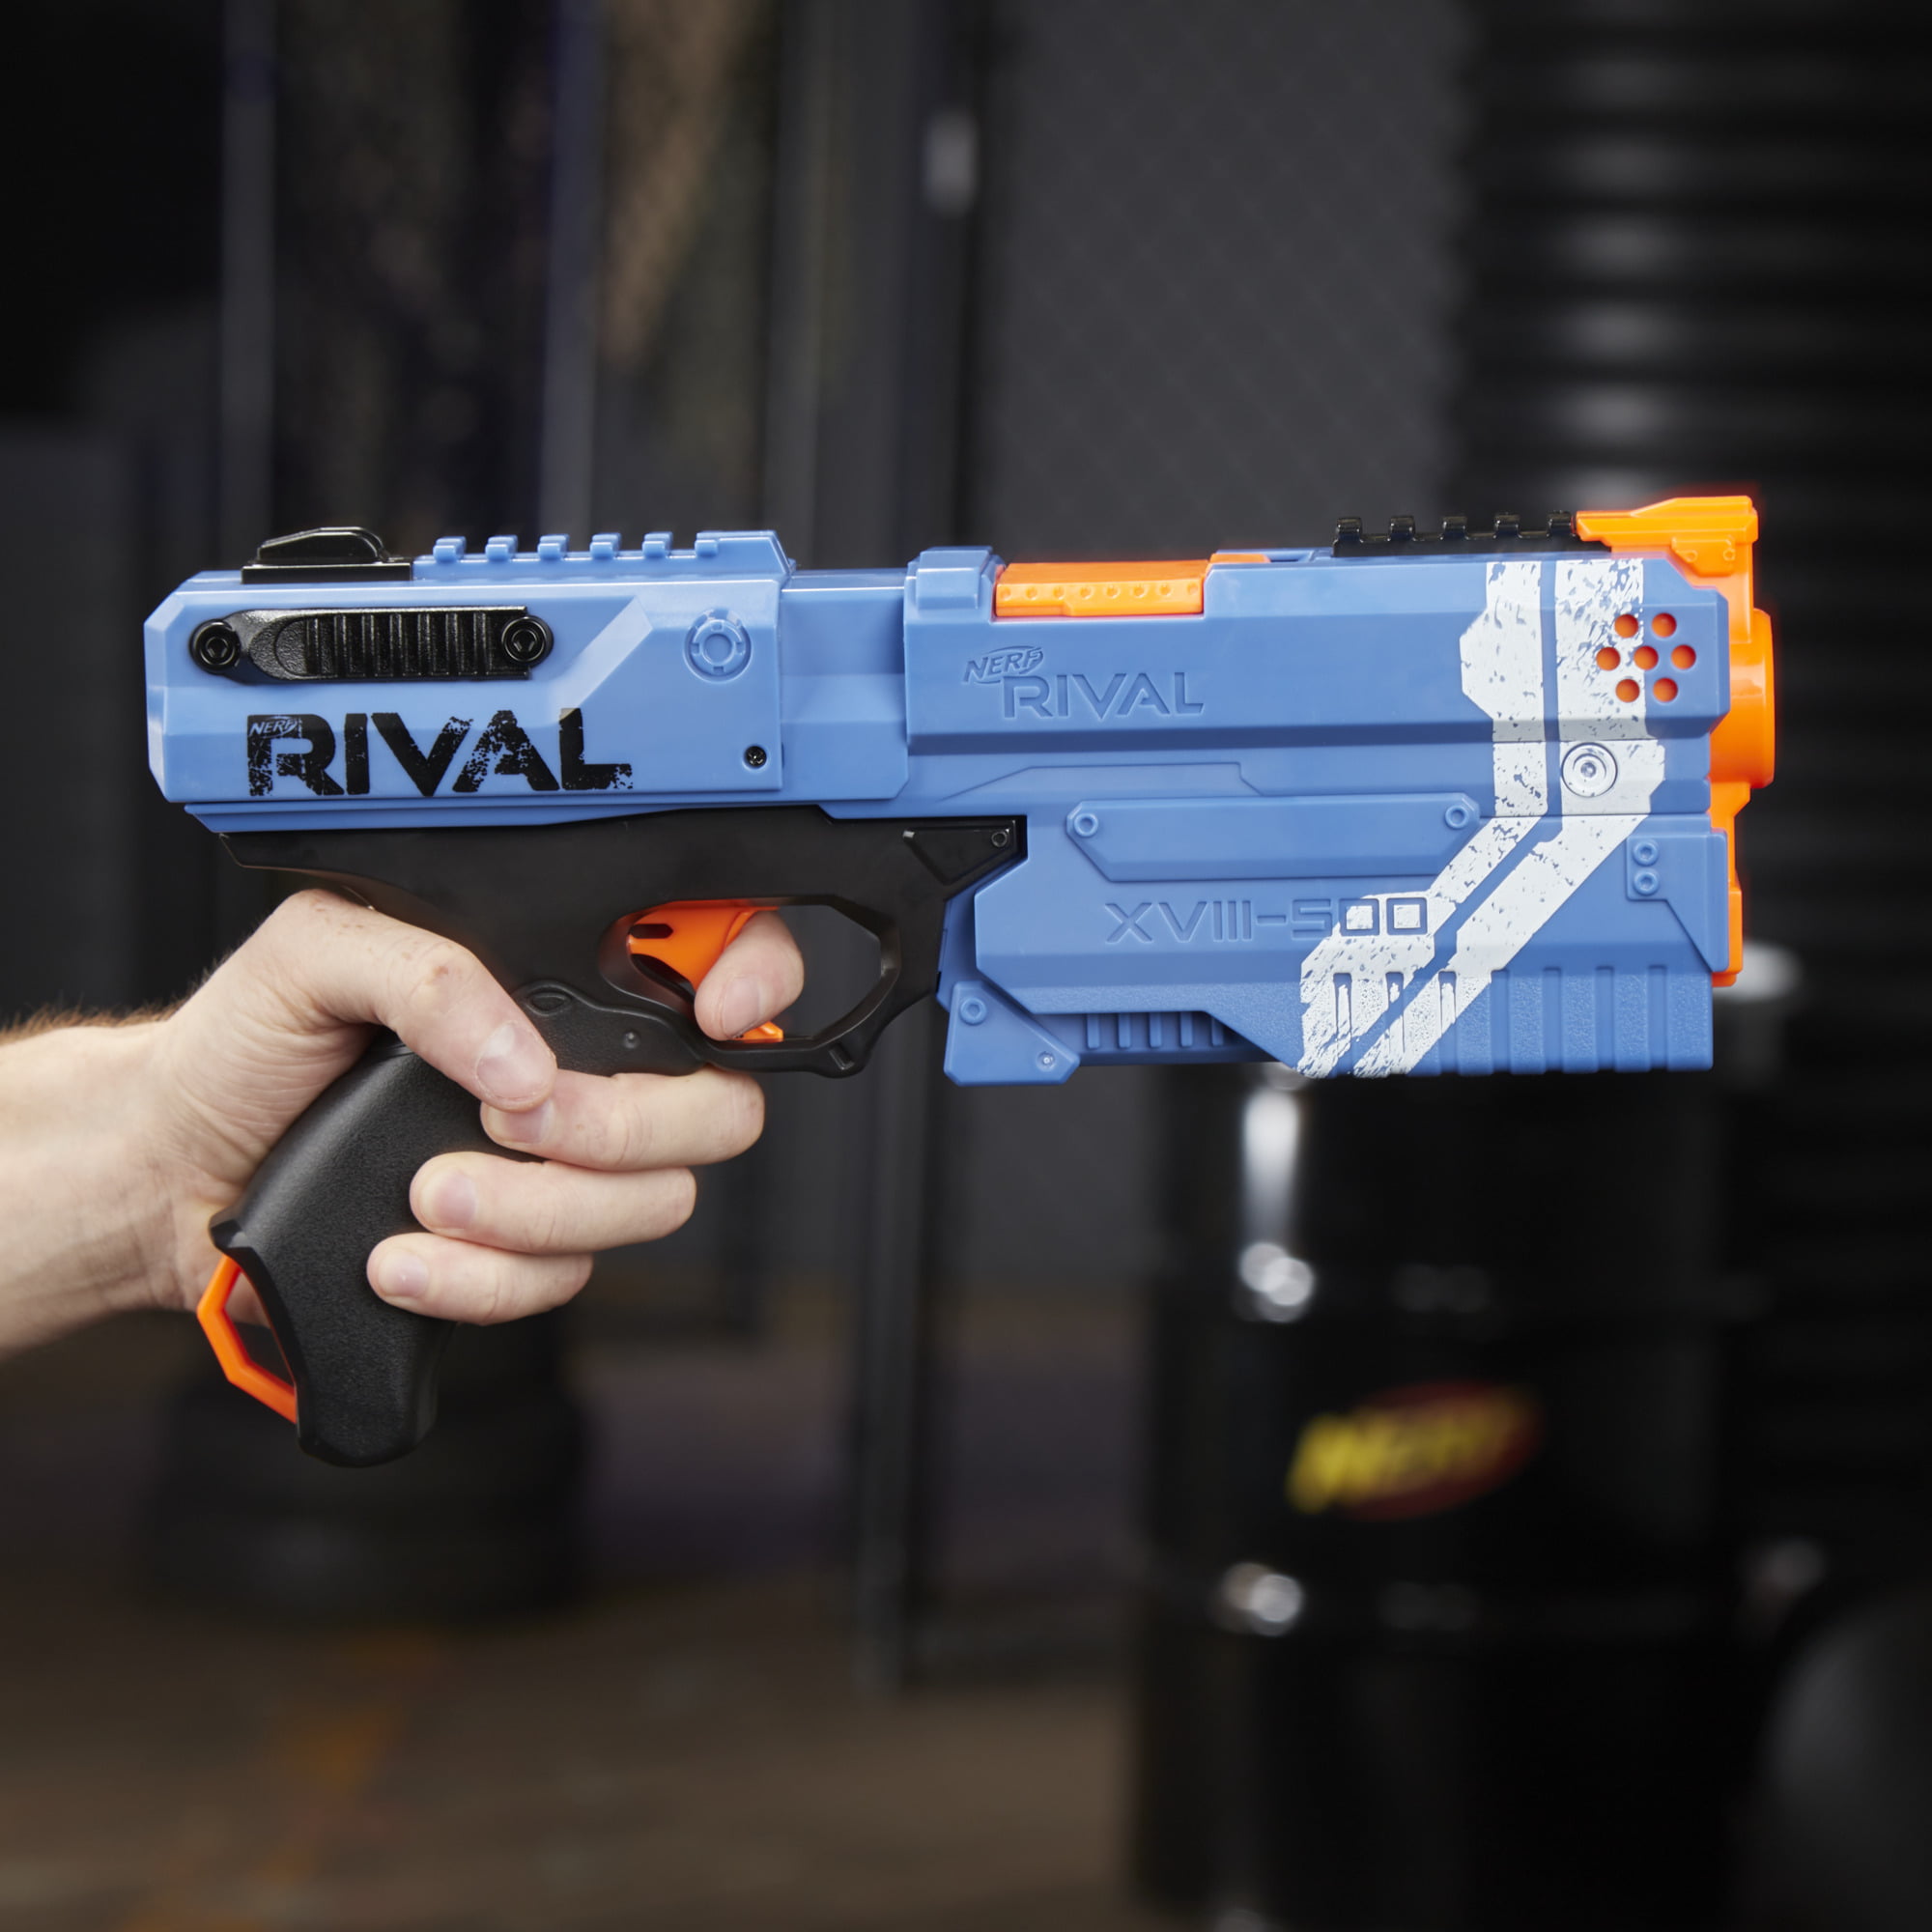 Nerf Rival Kronos Blaster Xviii-500 5x High Impact Rounds Hasbro 7fogzn1 for sale online 